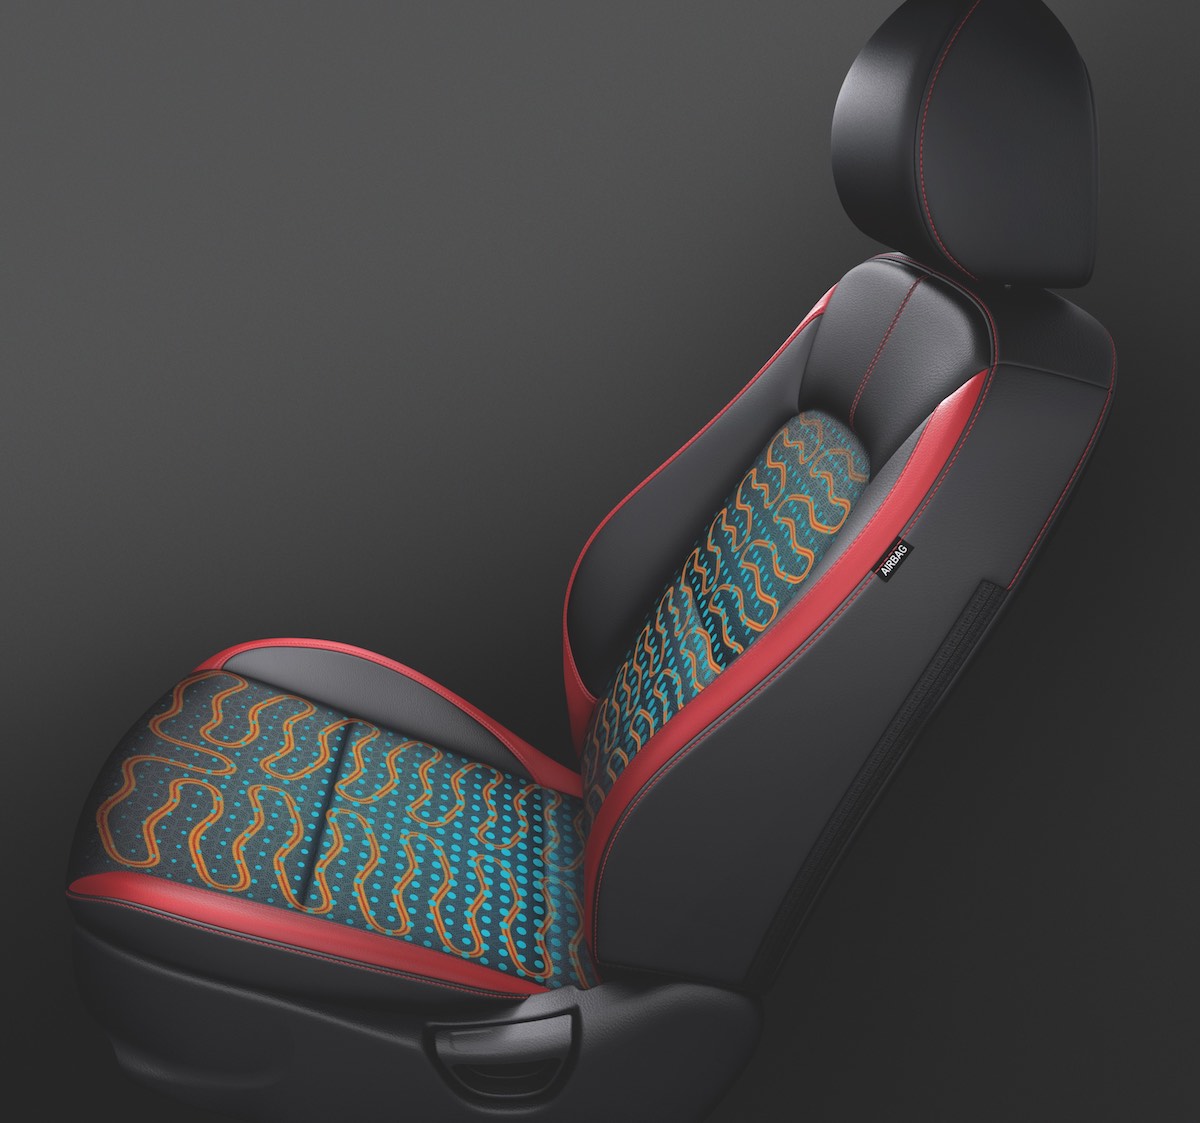 3.The Picanto GT-line Plus內裝配備升級，雙前座加熱座椅功能及駕駛座附通風座椅功能，提供更舒適的乘坐享受。.jpg